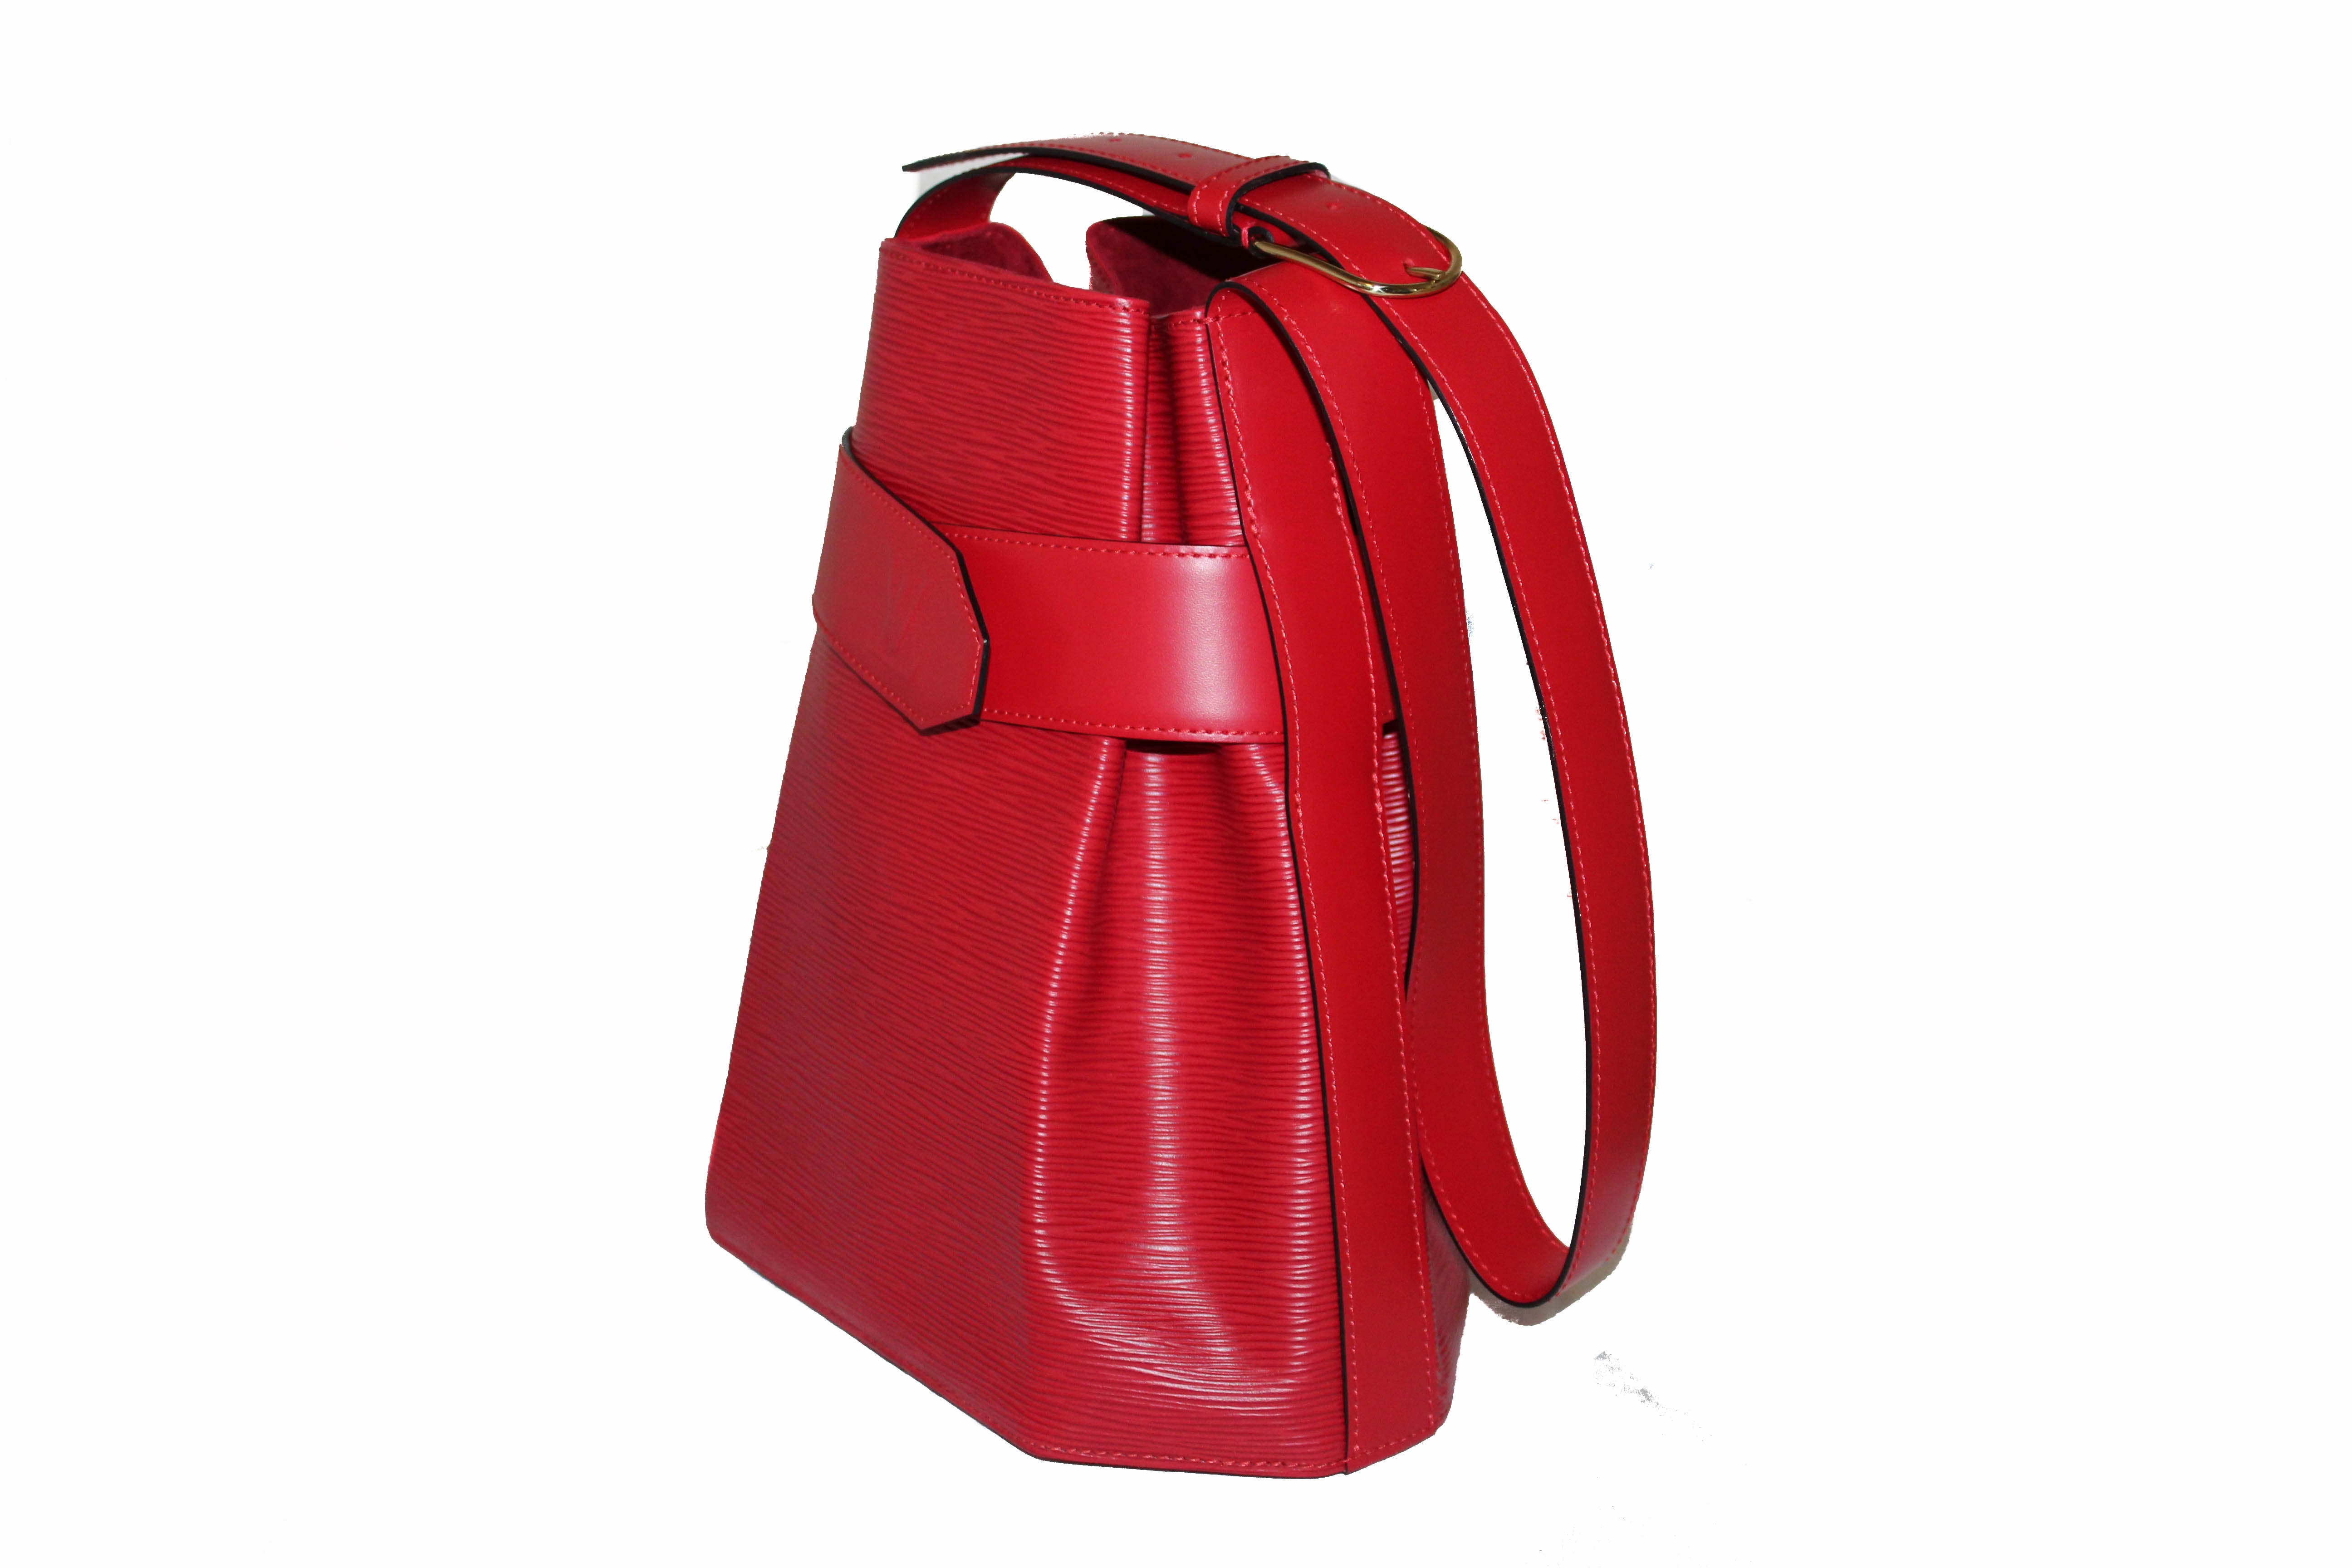 Authentic Louis Vuitton Red Epi Leather Sac D'Epaule PM Bag